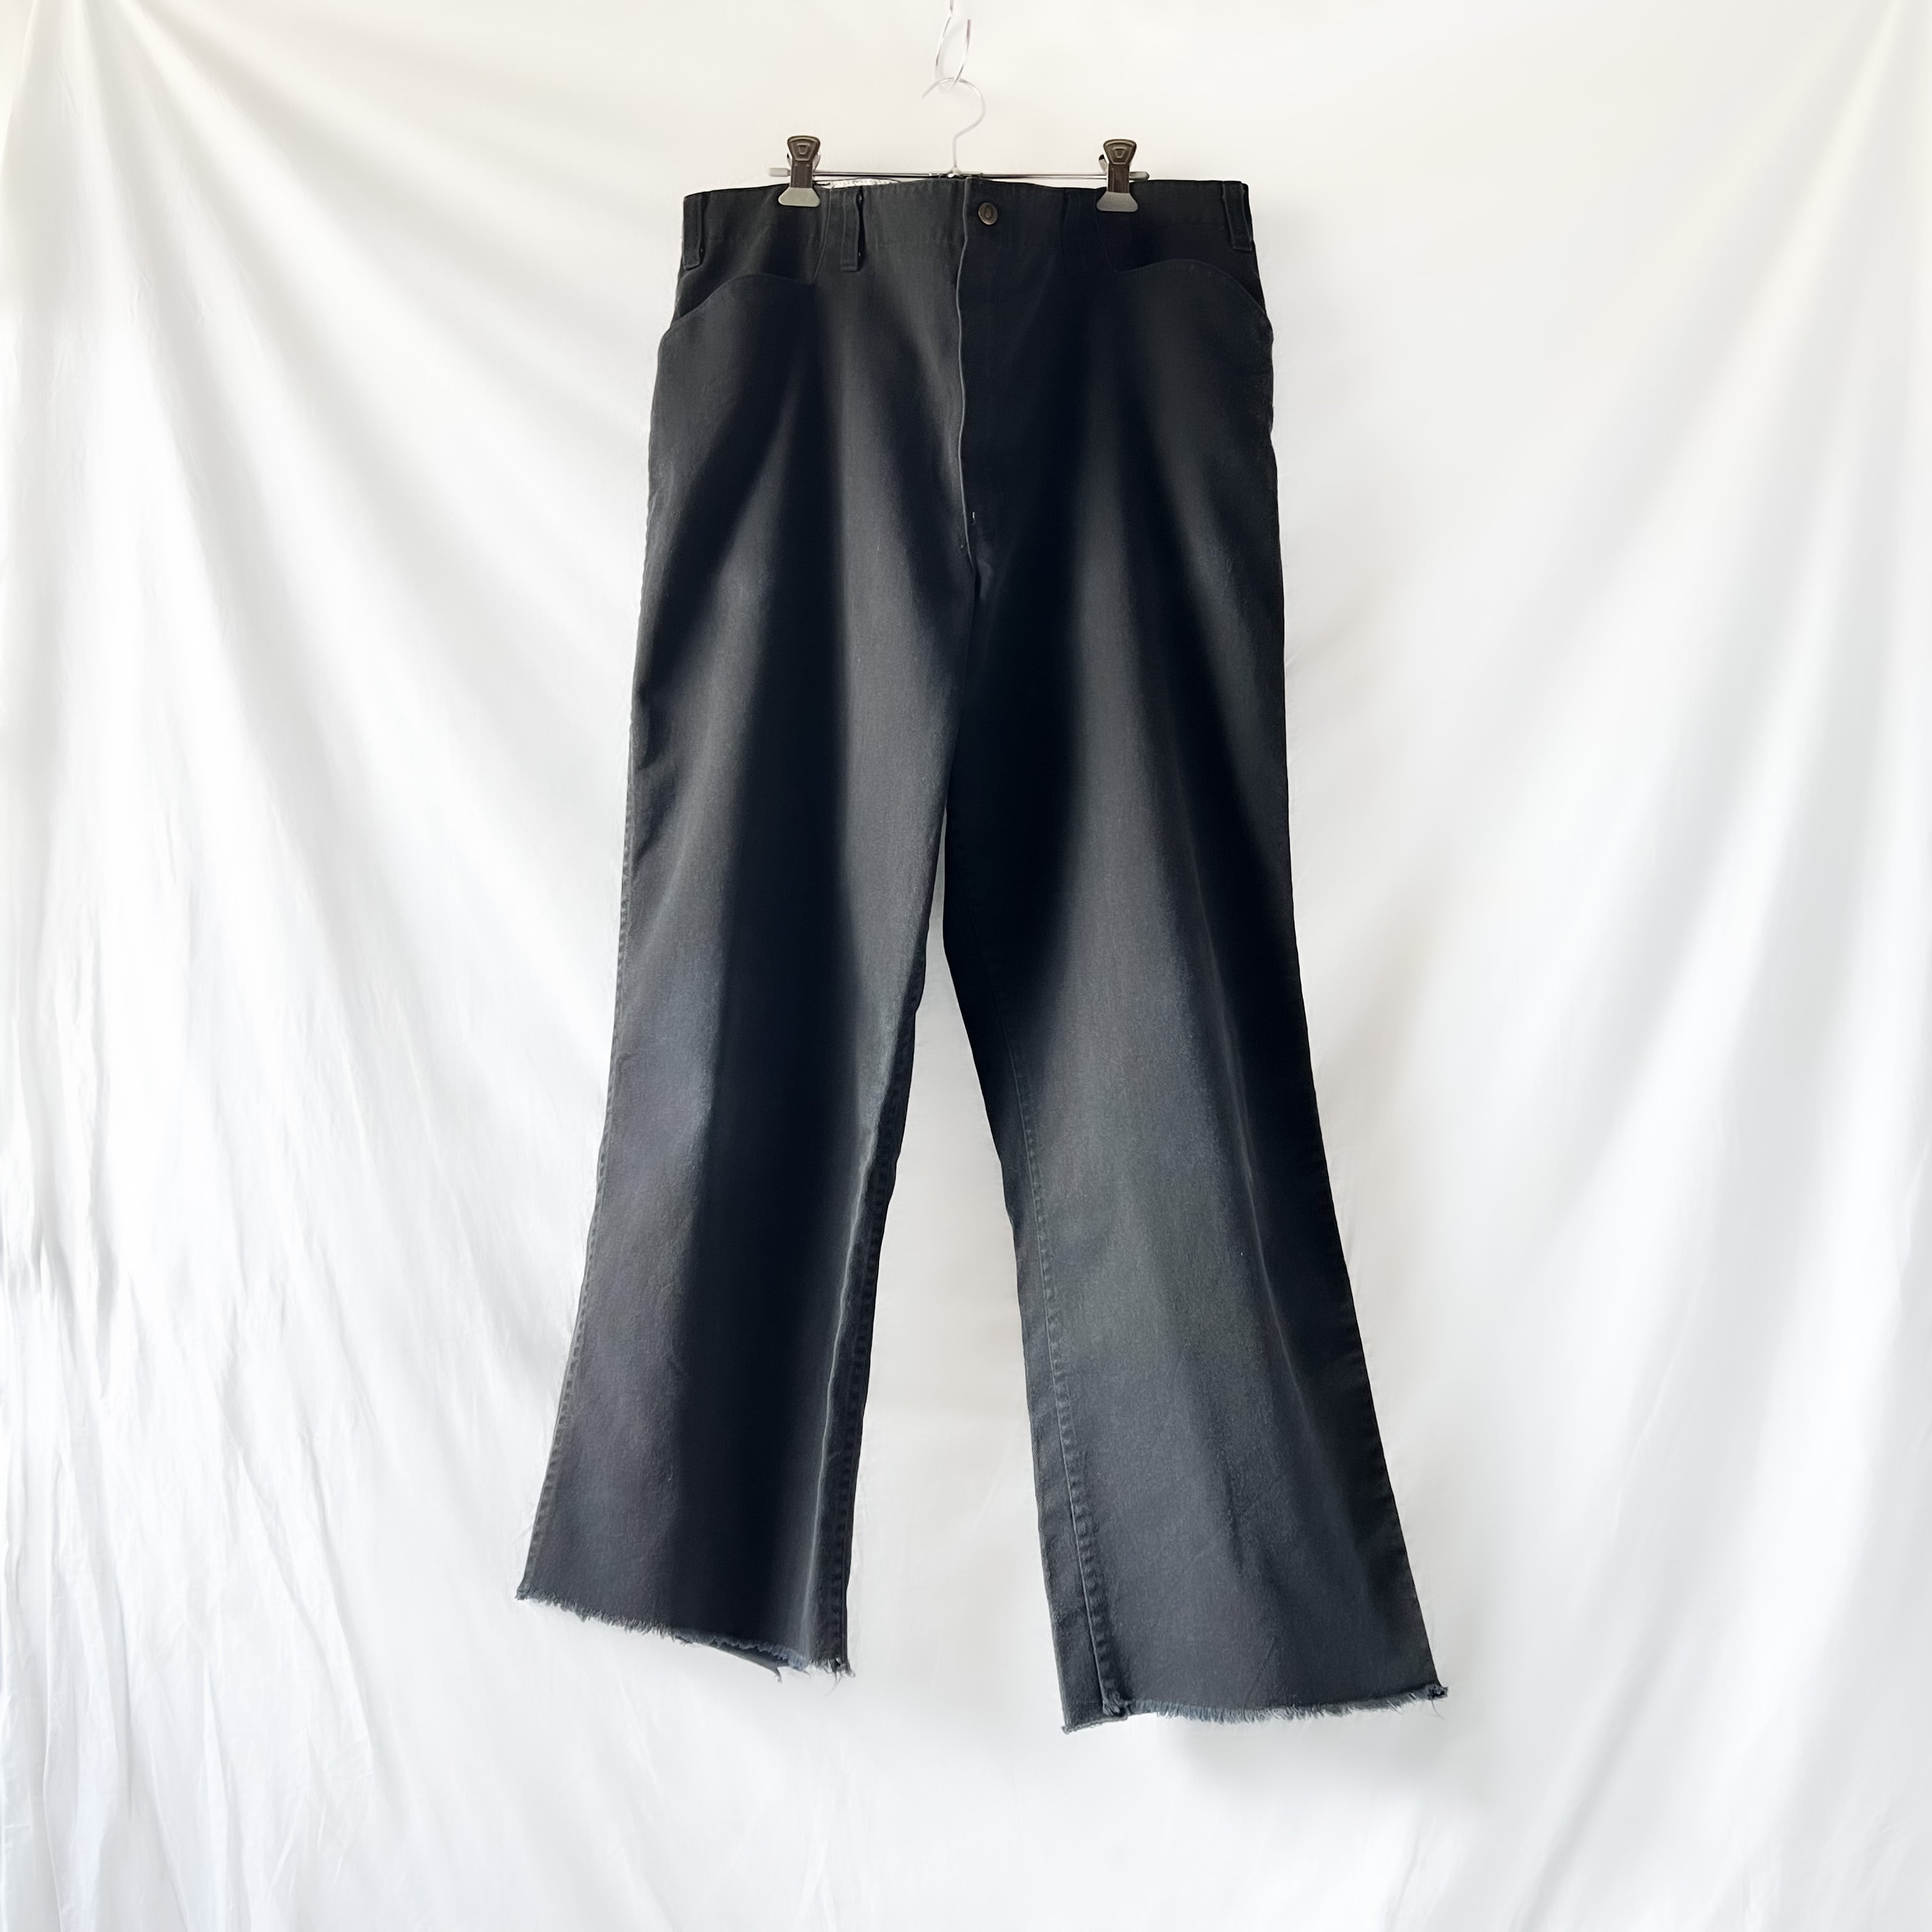 90s “Ben davis” made in usa big size cut off black pants 90年代